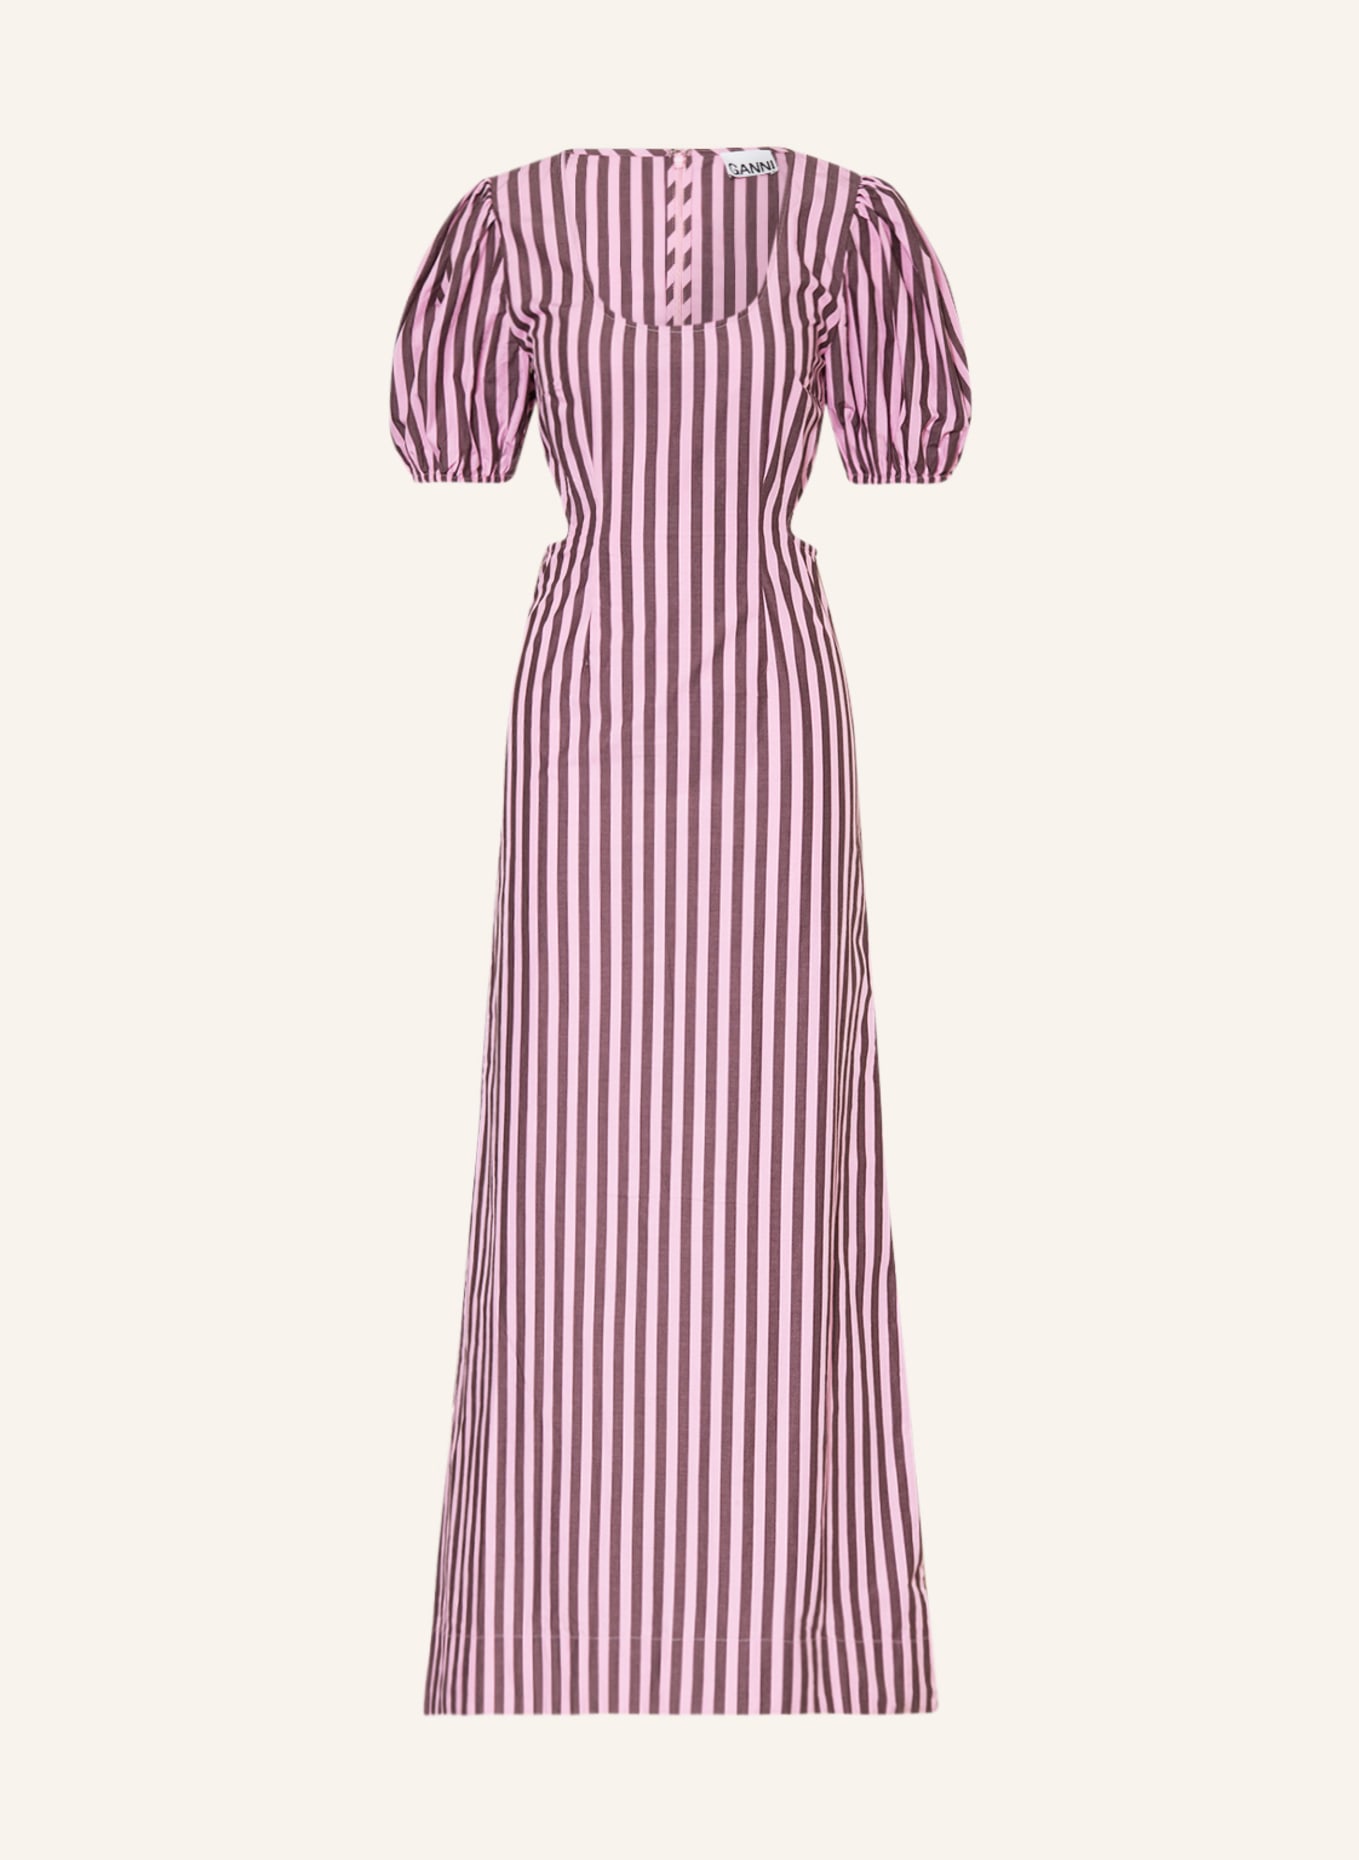 GANNI Kleid mit Cut-out, Farbe: ROSA/ DUNKELGRAU (Bild 1)